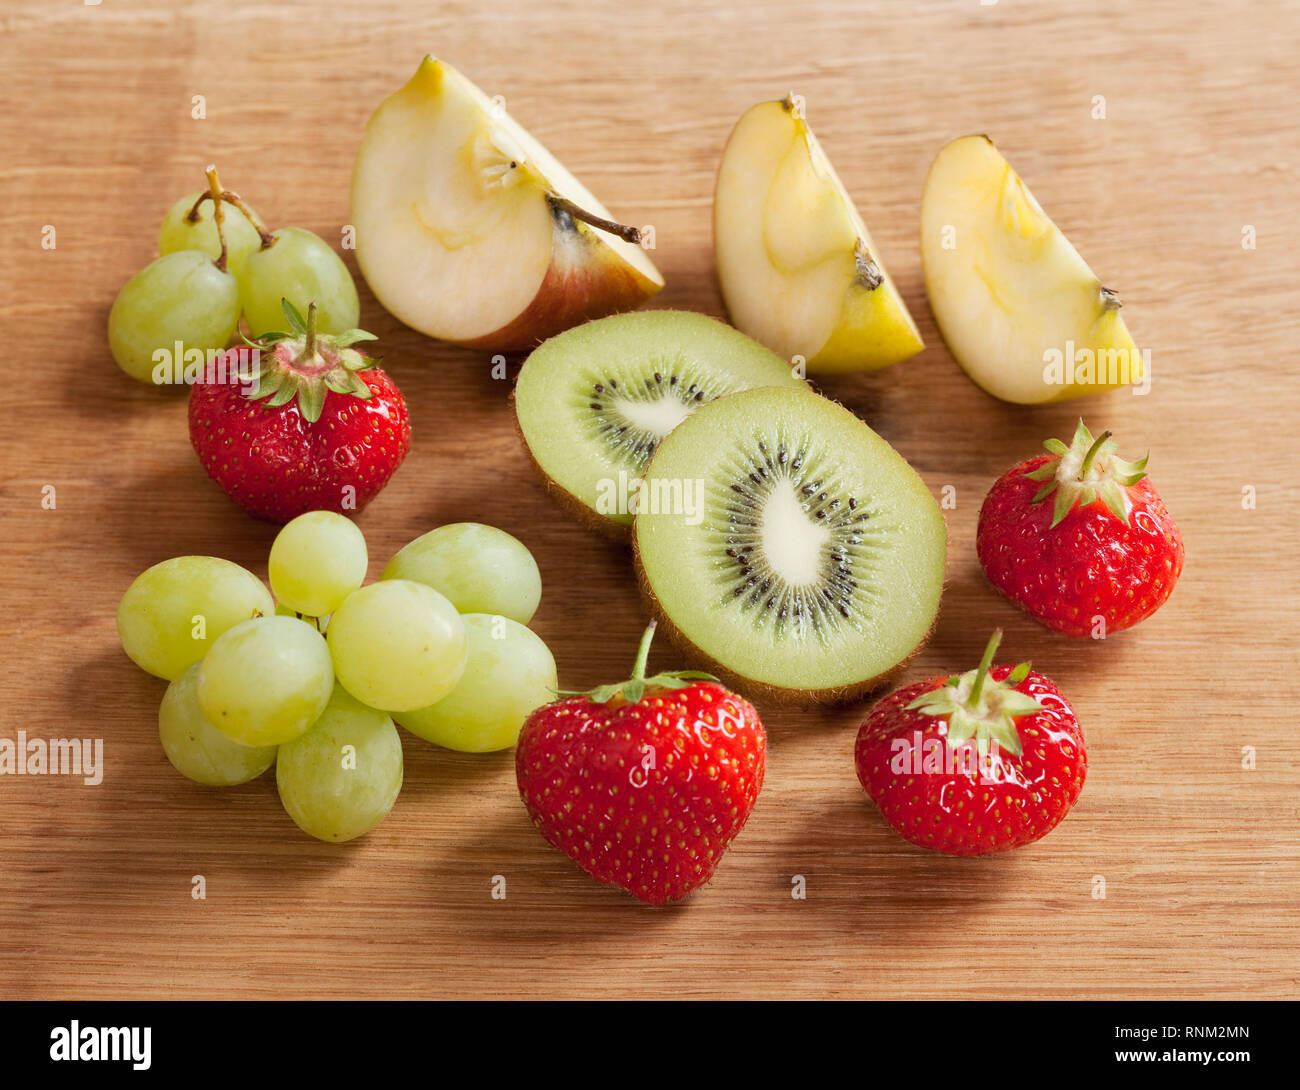 Fruit: Apple, green grapes, kiwi and strawberries. Stuido picture. Gremany. Stock Photo